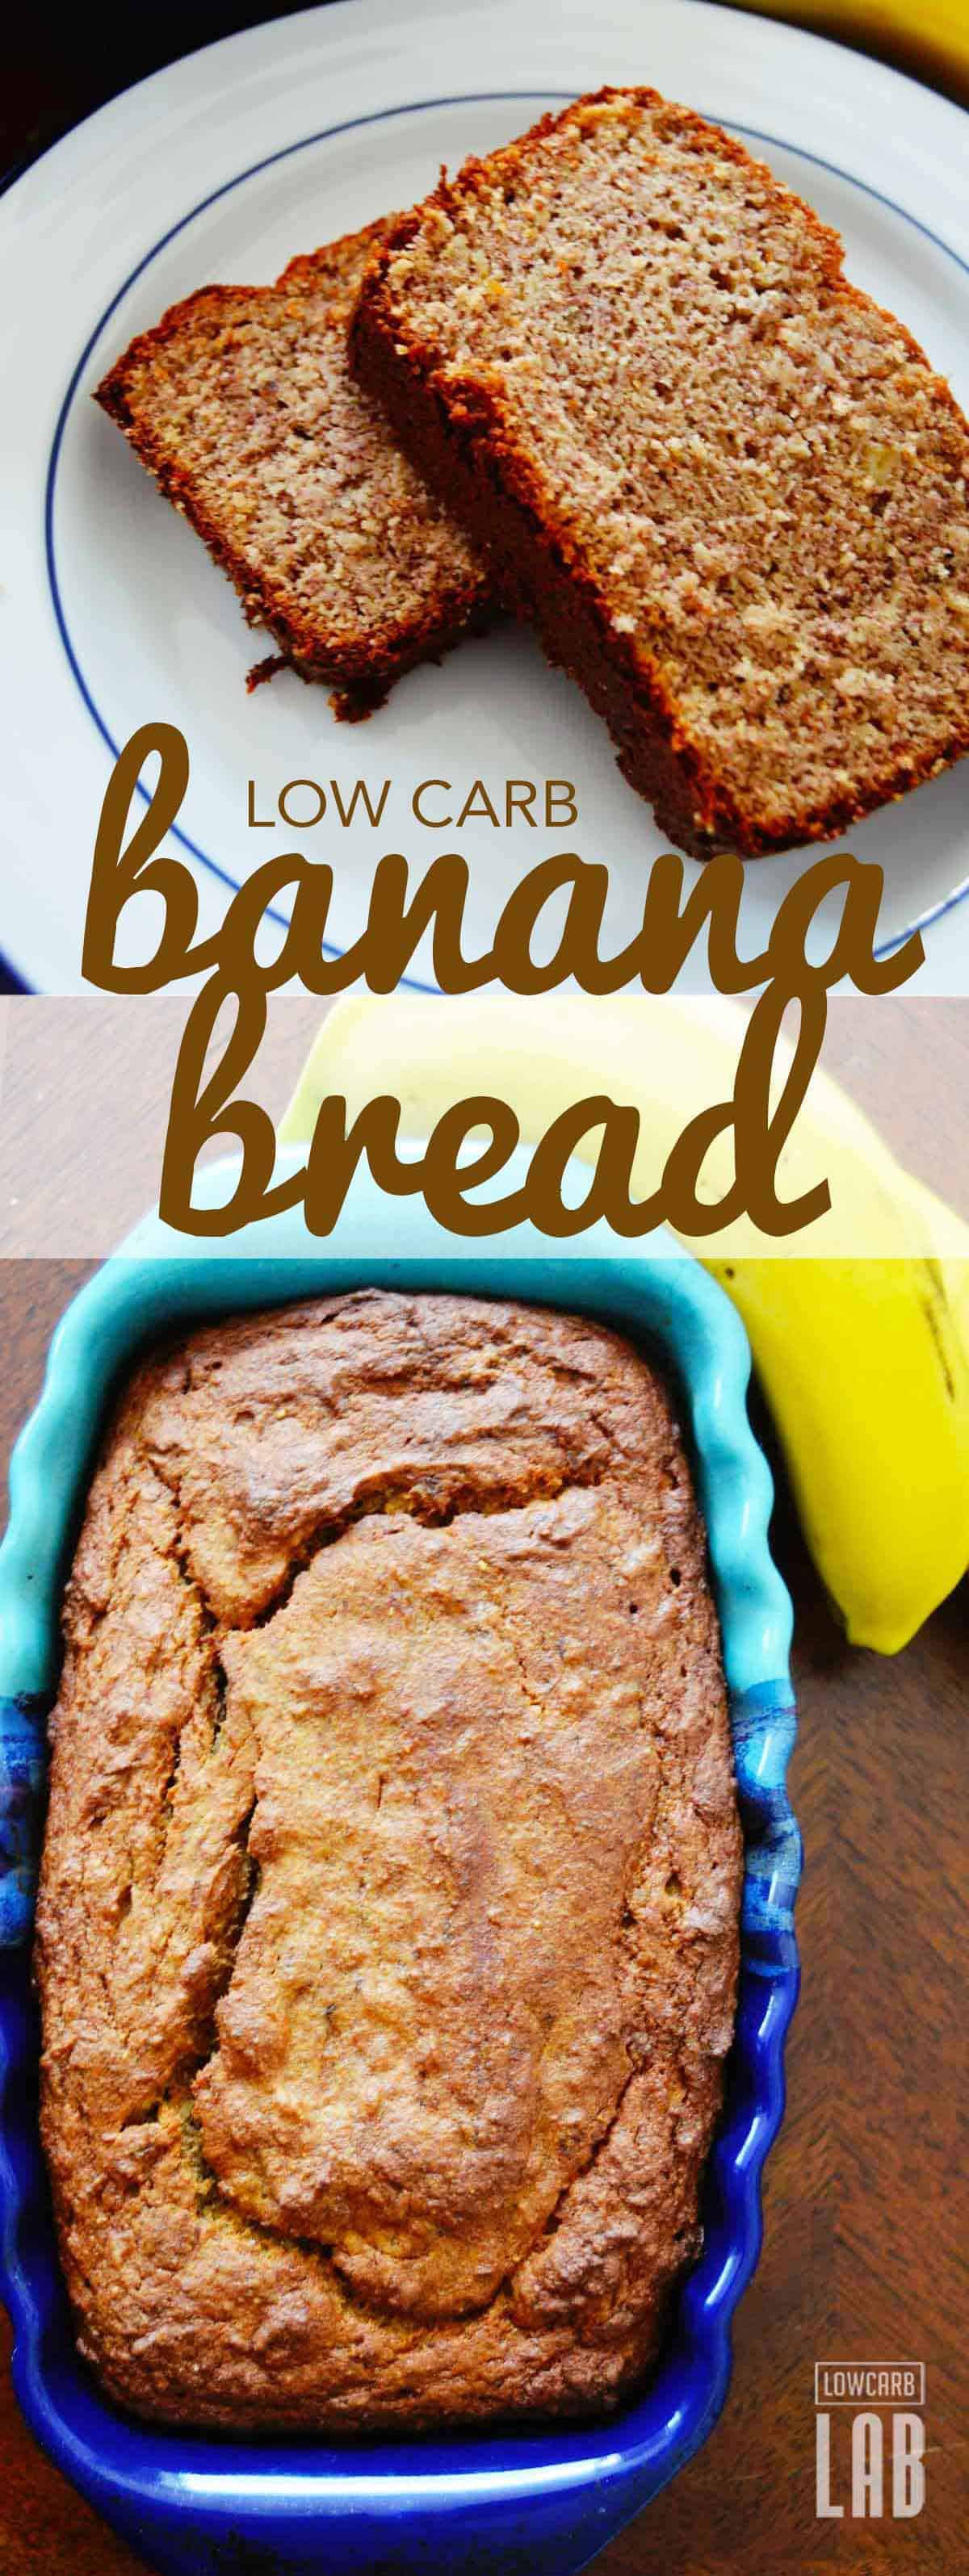 Easy Low Carb Banana Bread Recipe